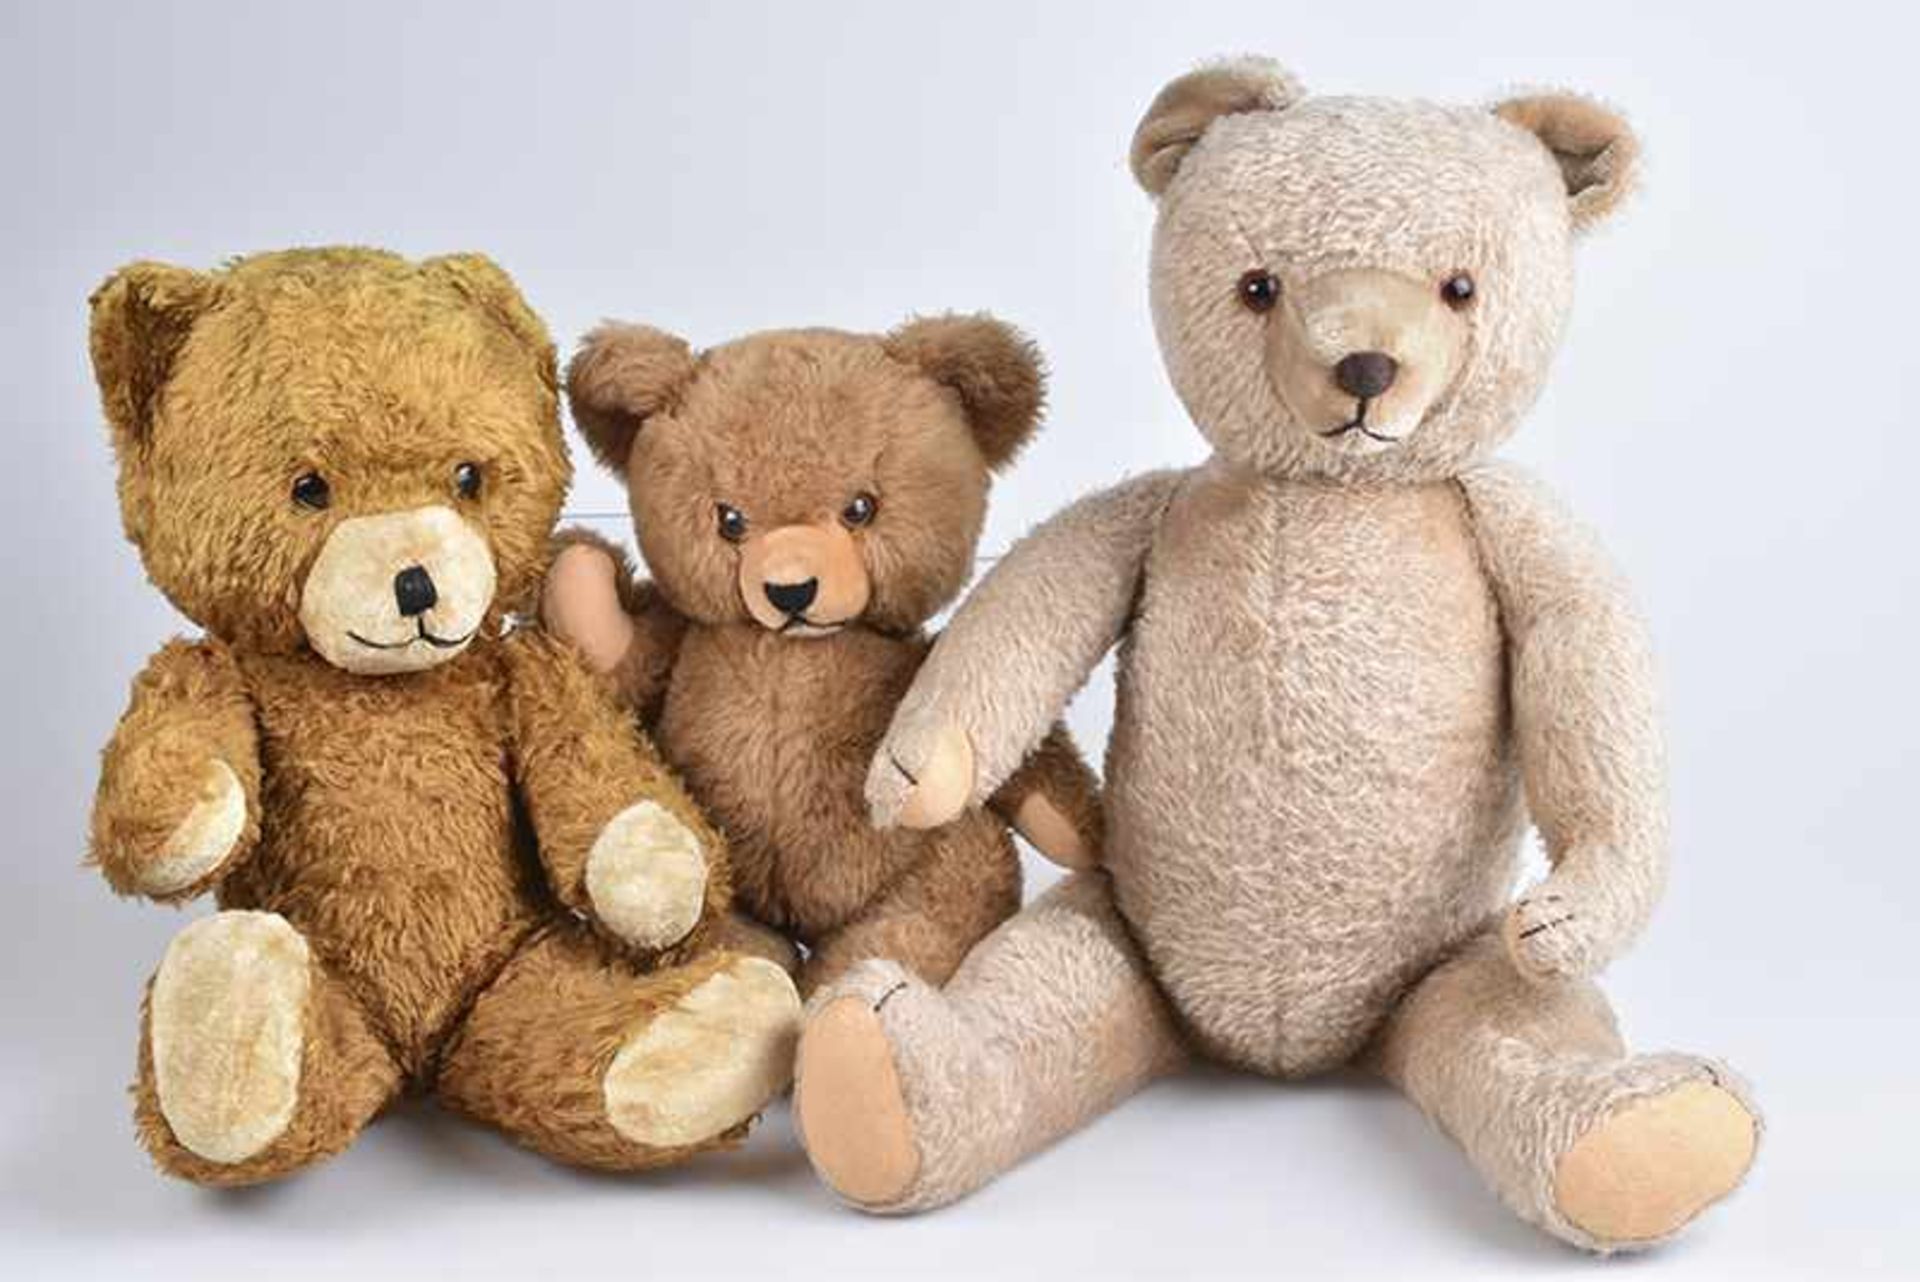 HERMANN u.a. 3 Bären, jeweils 5-fach gegliedert, HERMANN Teddy, Mohair, caramel, Filzfüße und -